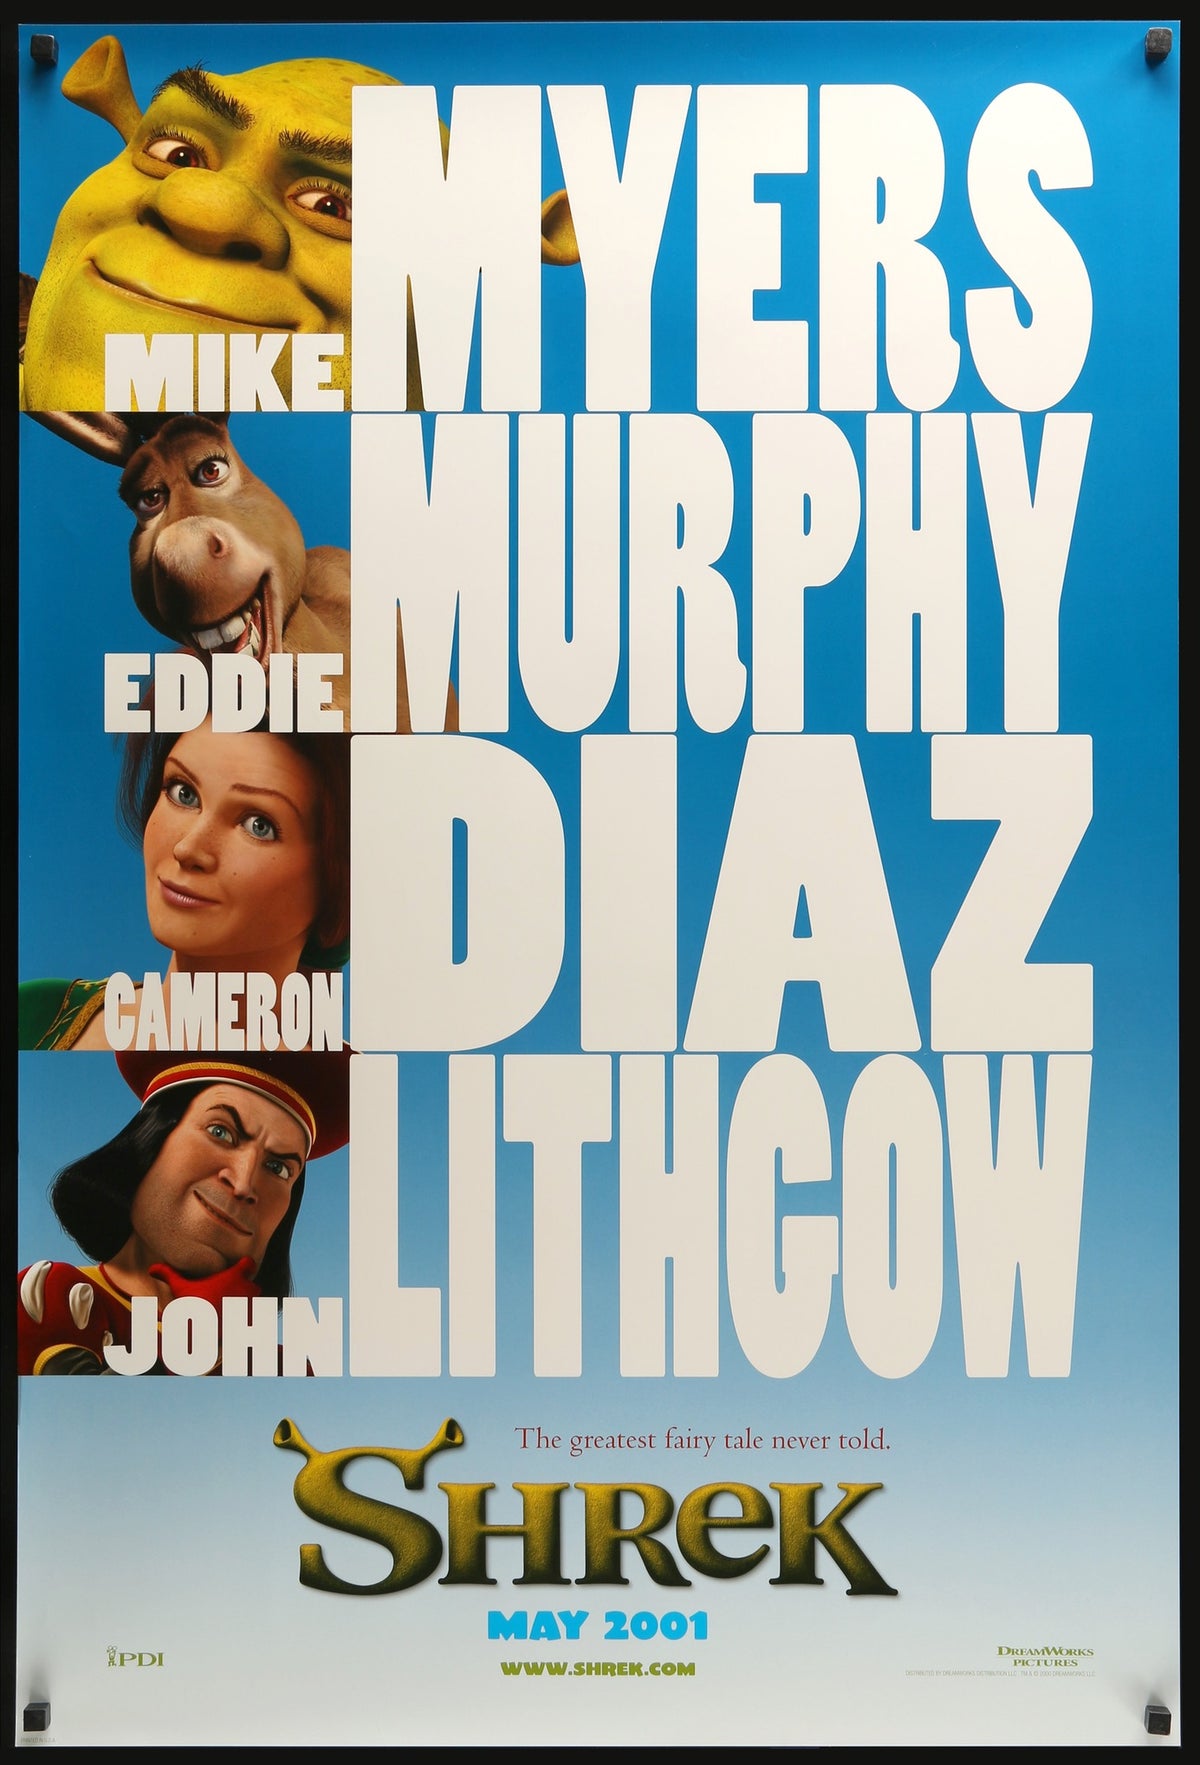 Shrek (2001) original movie poster for sale at Original Film Art